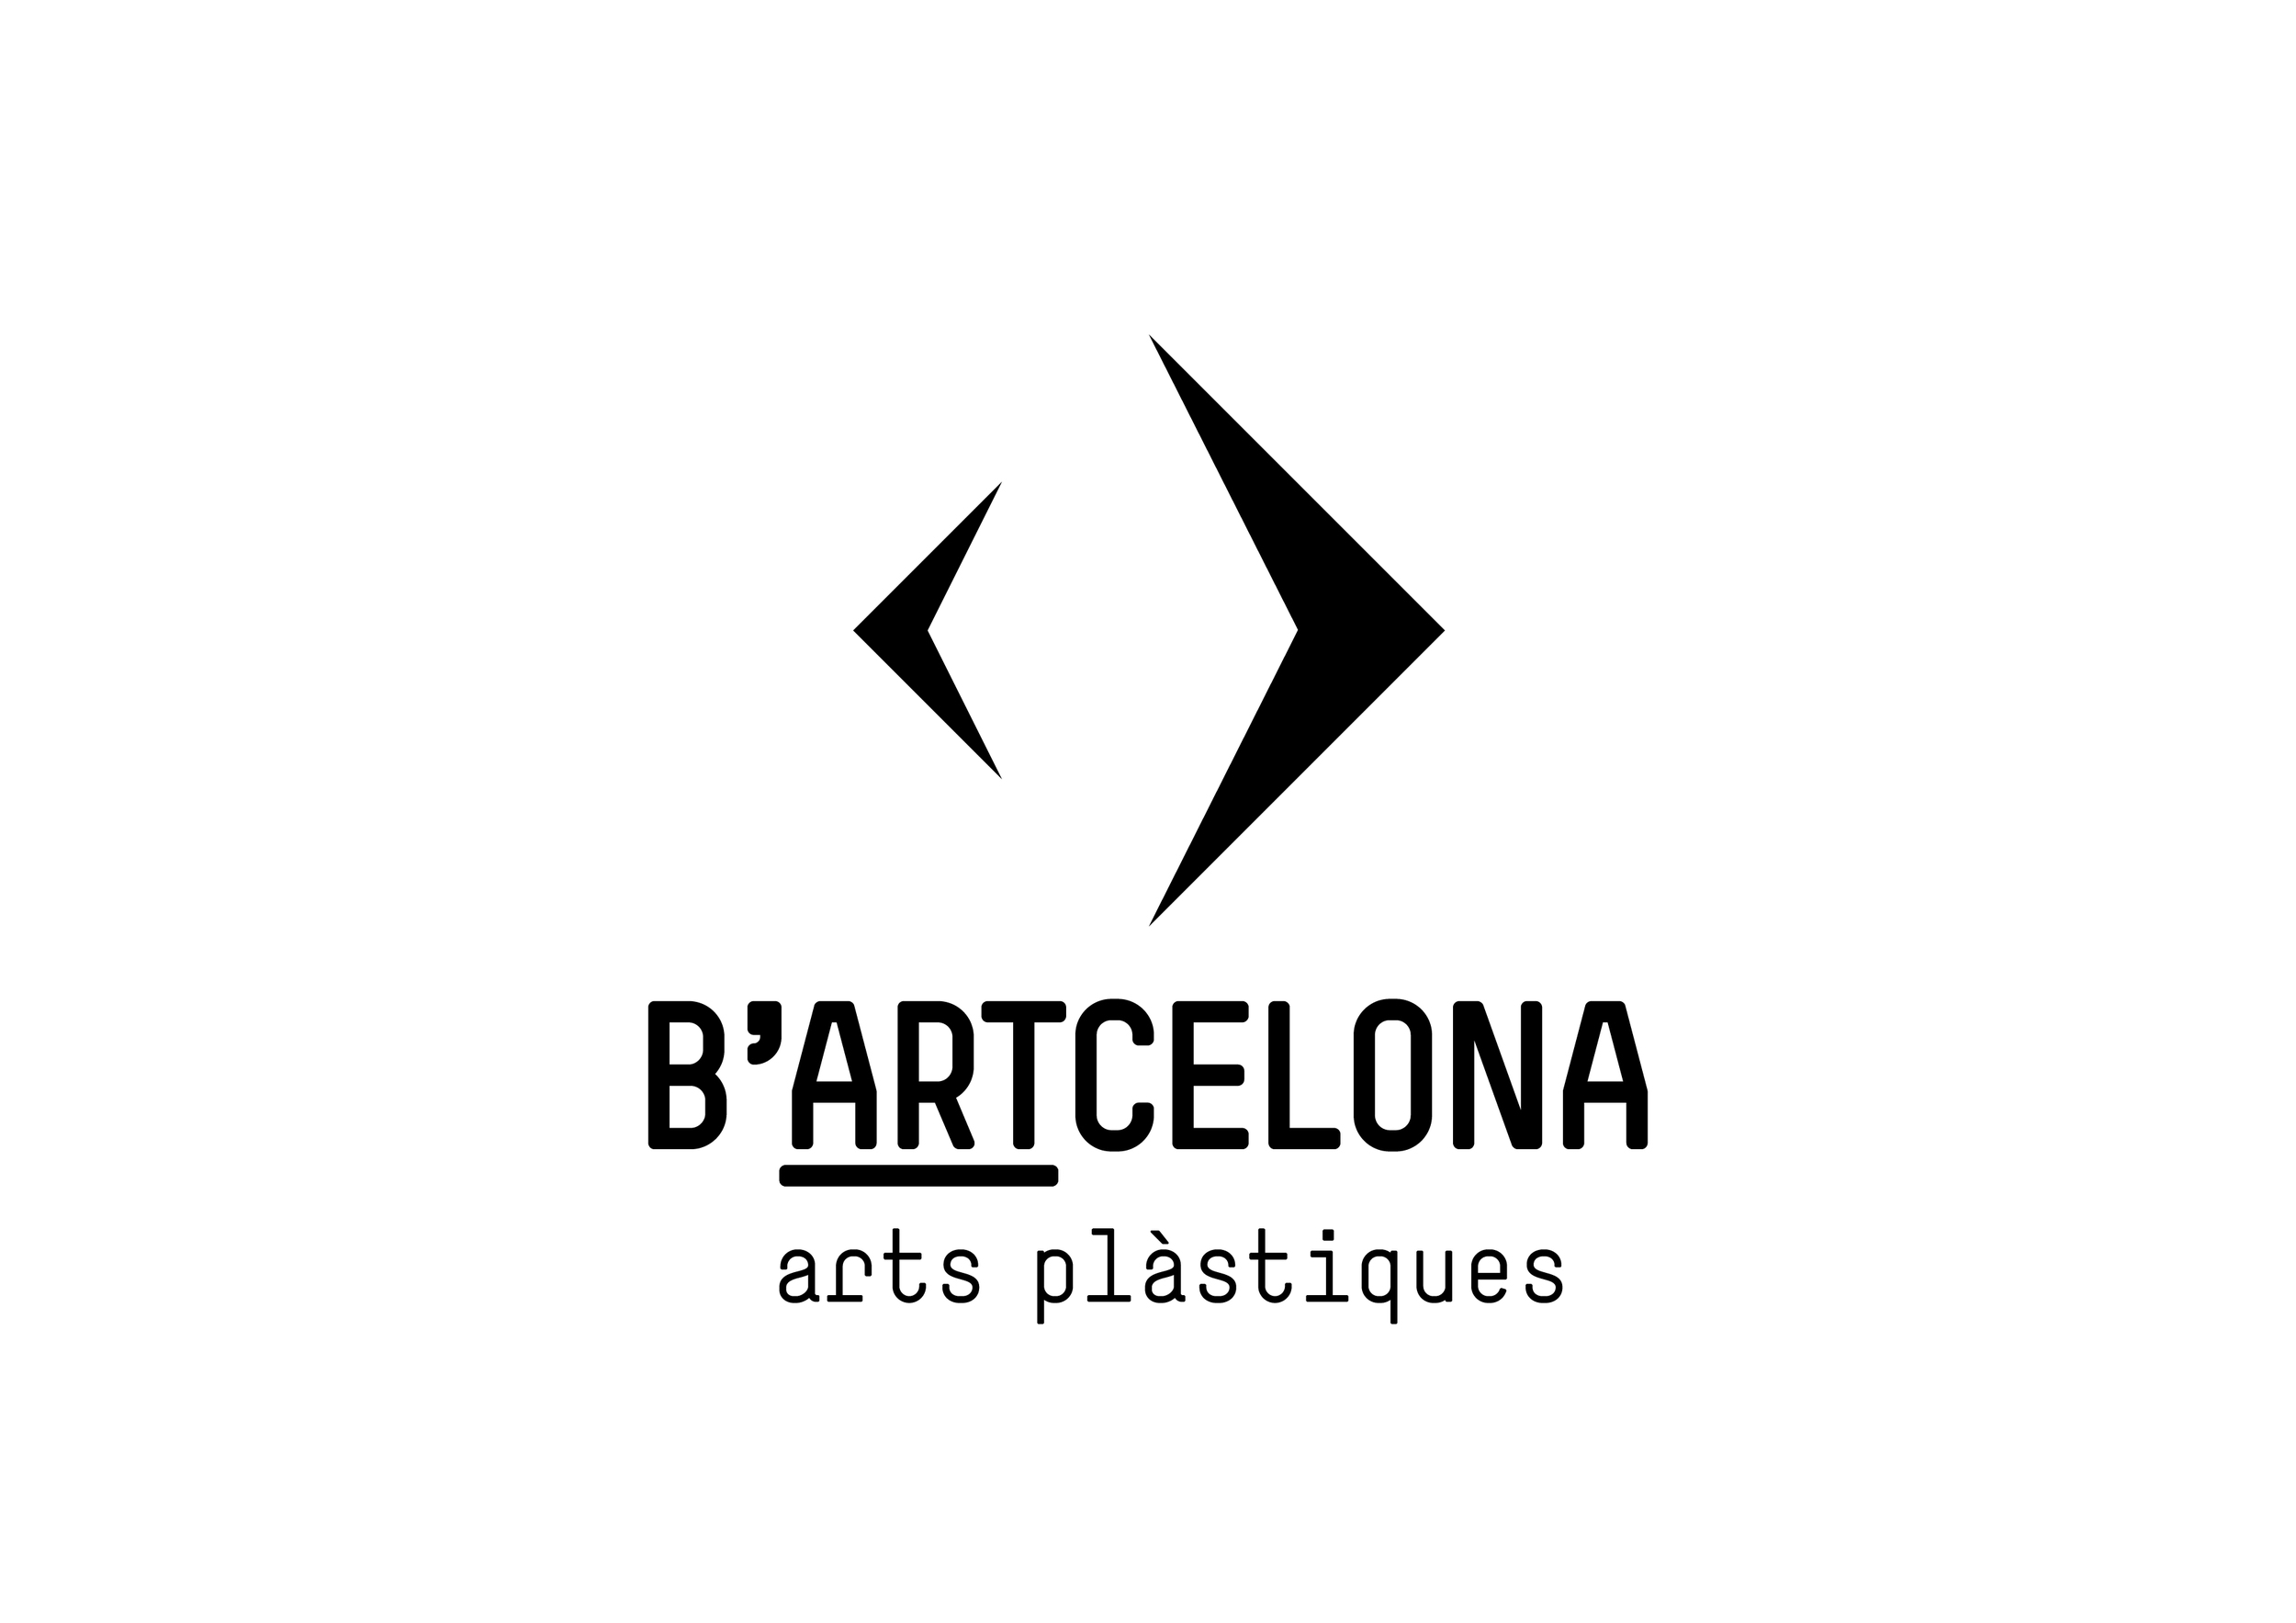 bartcelona_logo_victorgc-05.jpg